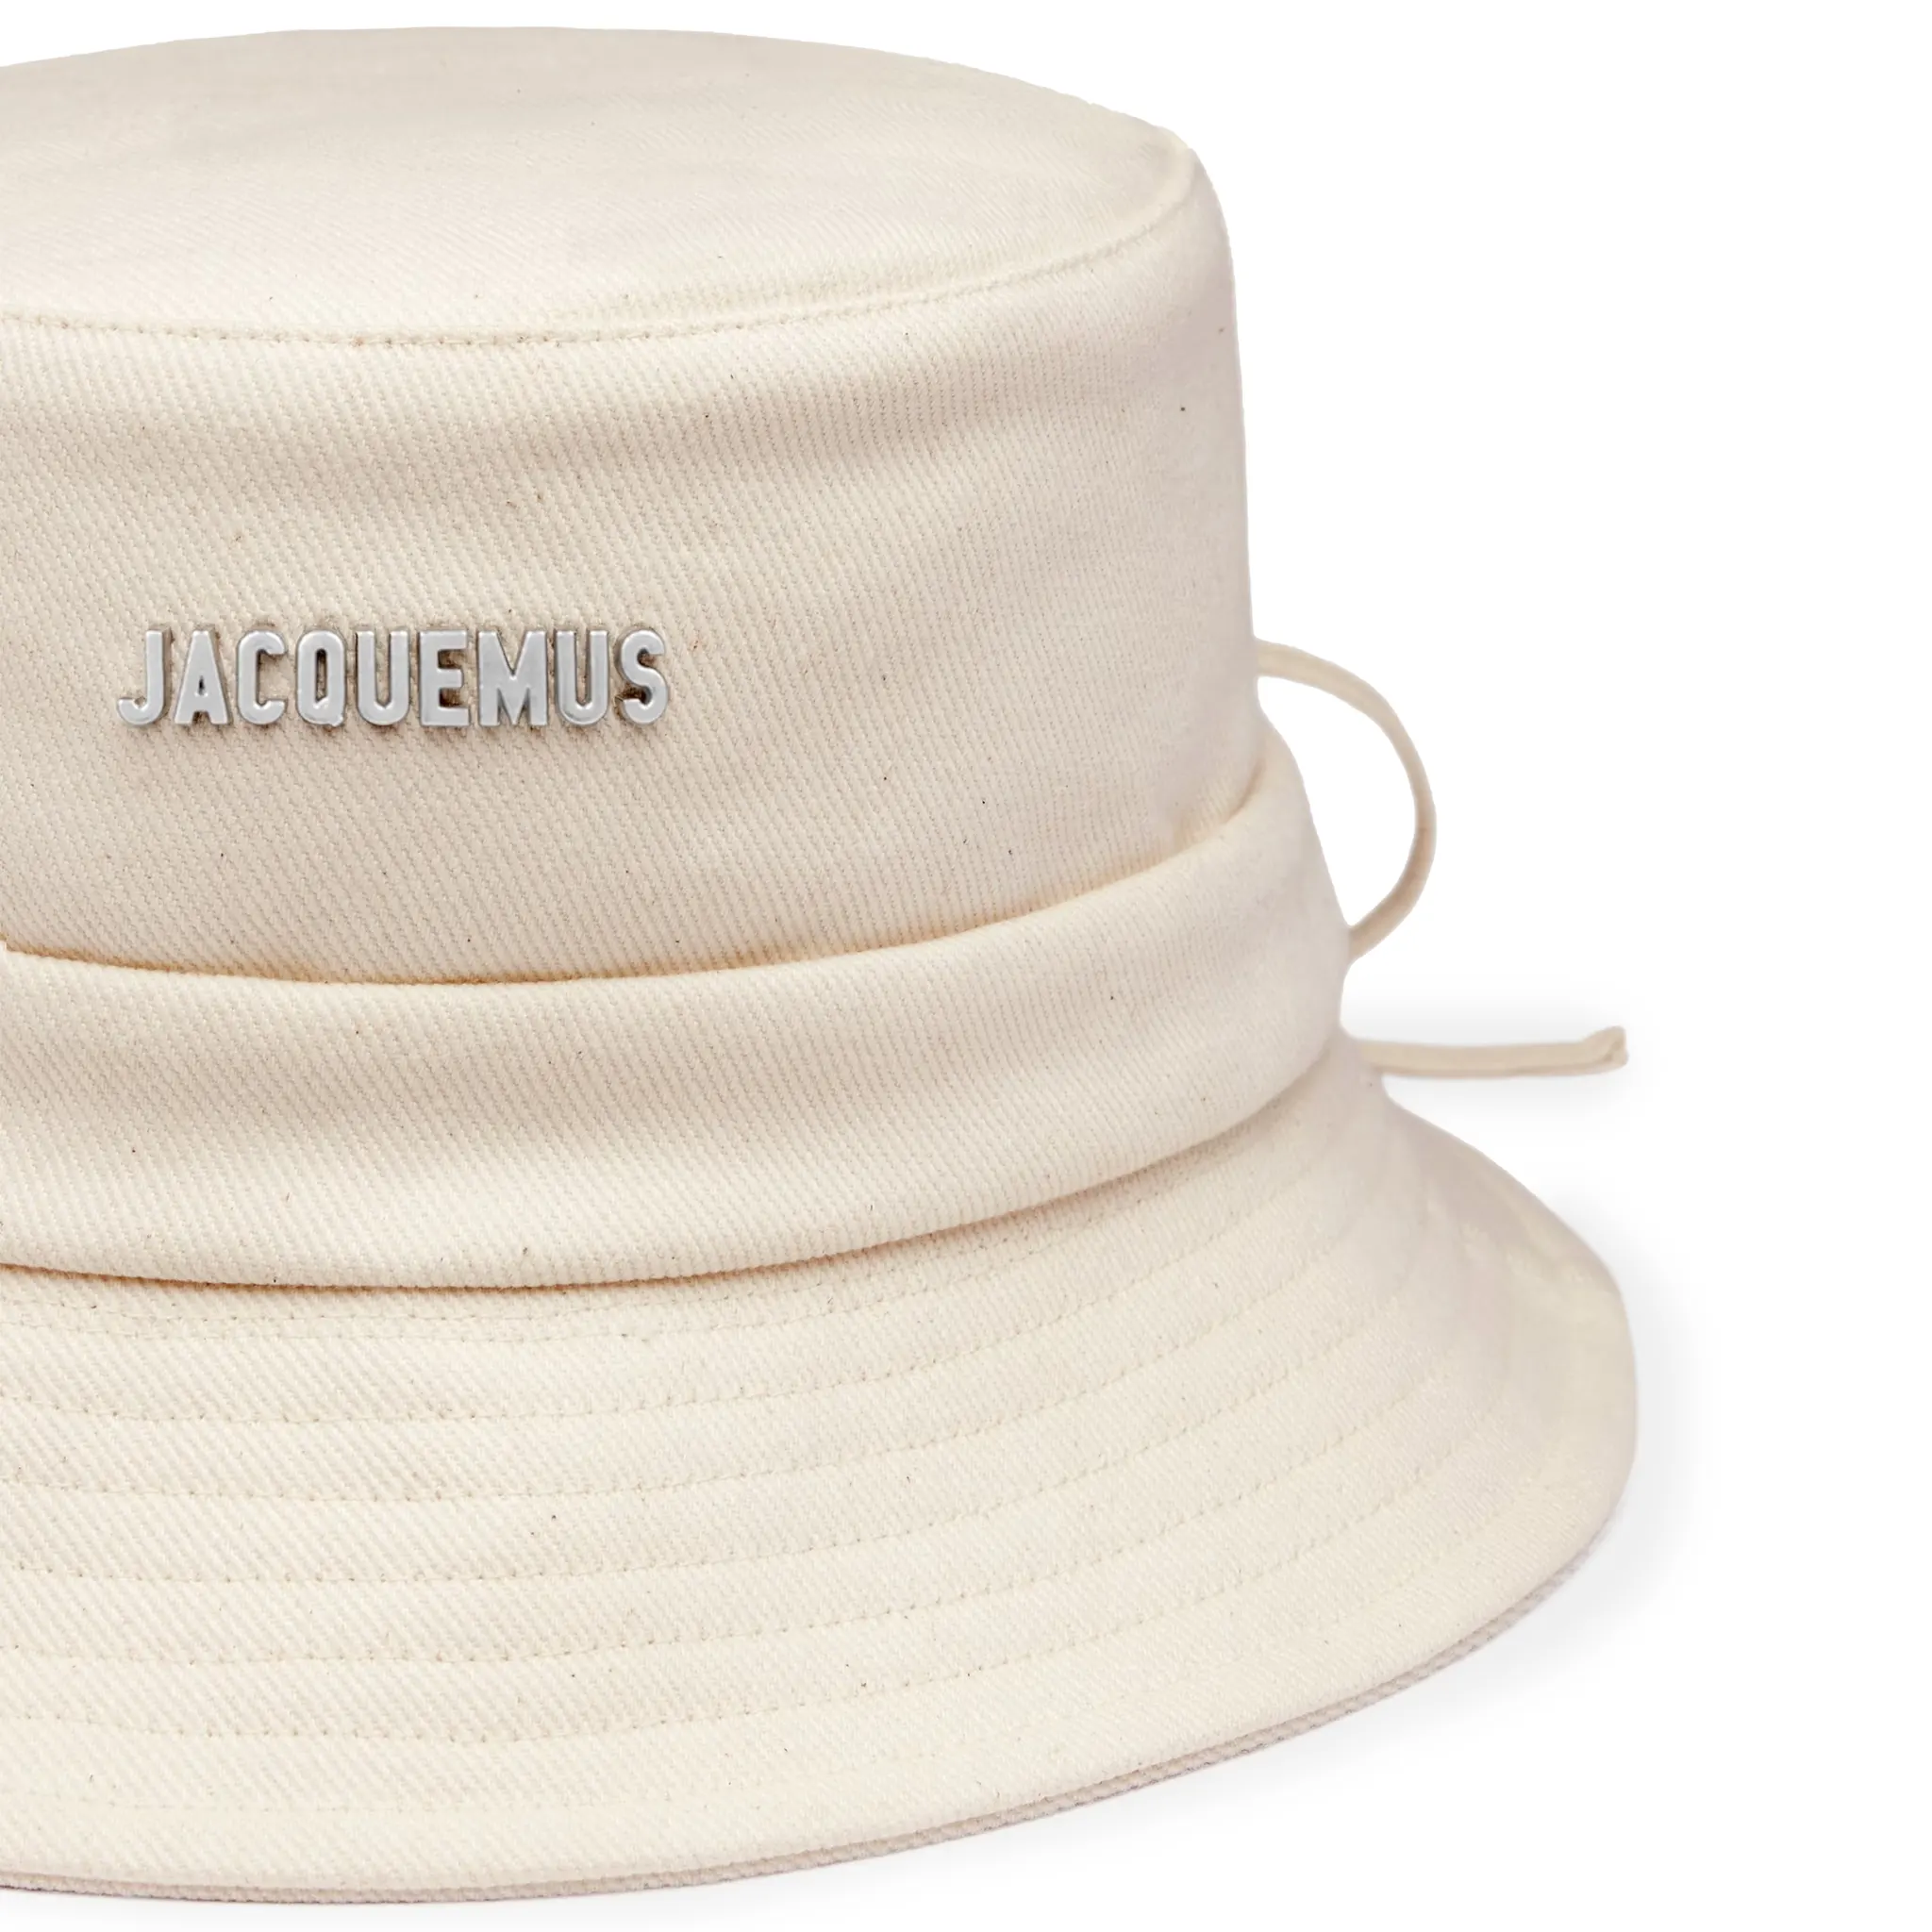 Detail view of Jacquemus Le Bob Gadjo Off White Bucket Watch Hat 223AC001-5001-110